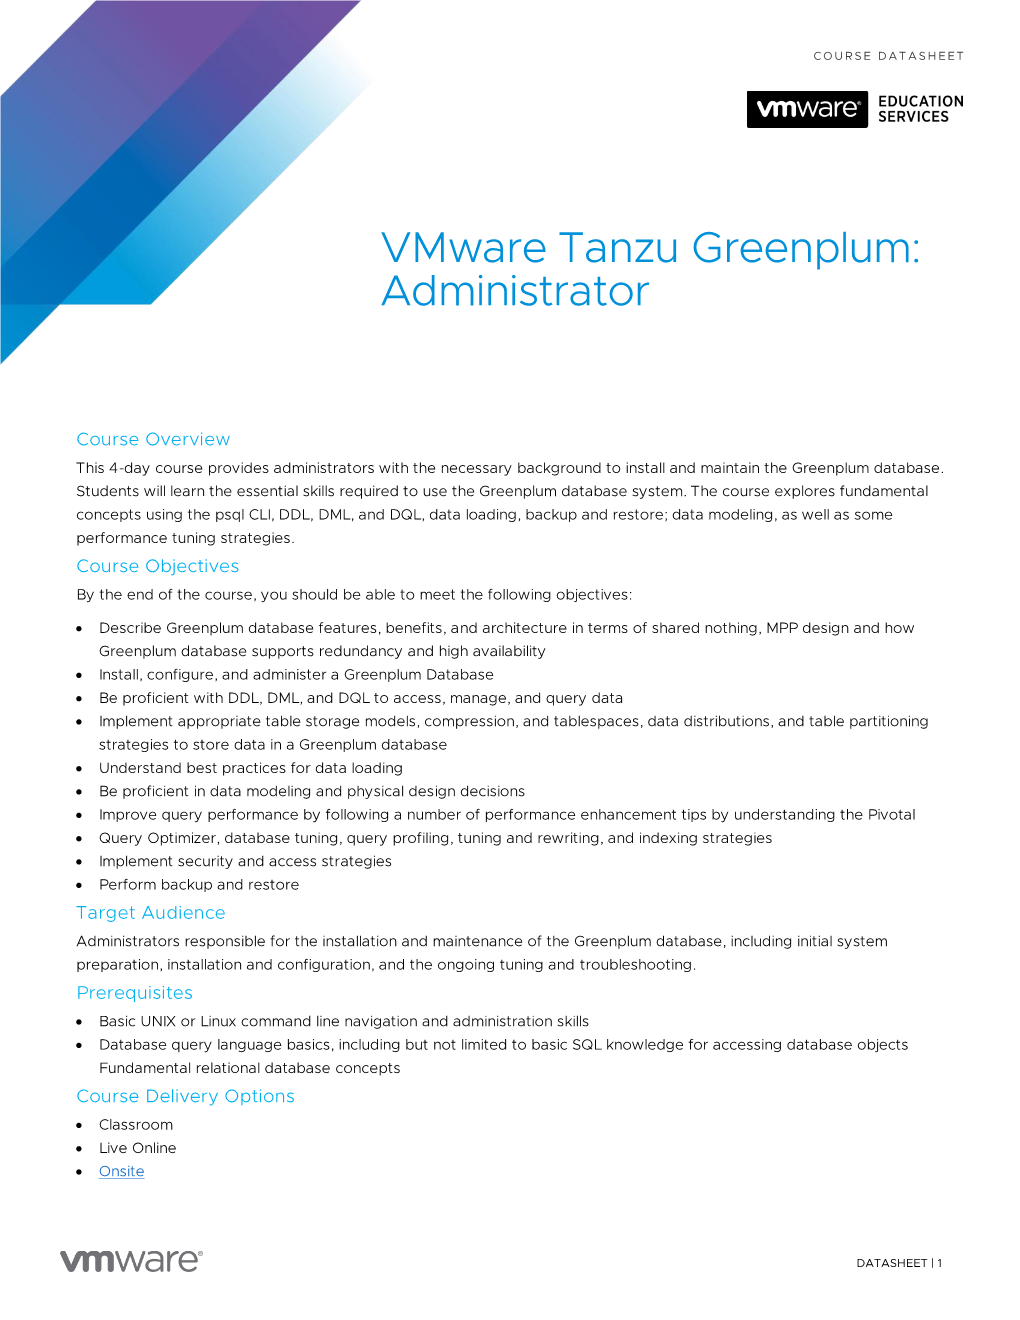 Vmware Tanzu Greenplum: Administrator